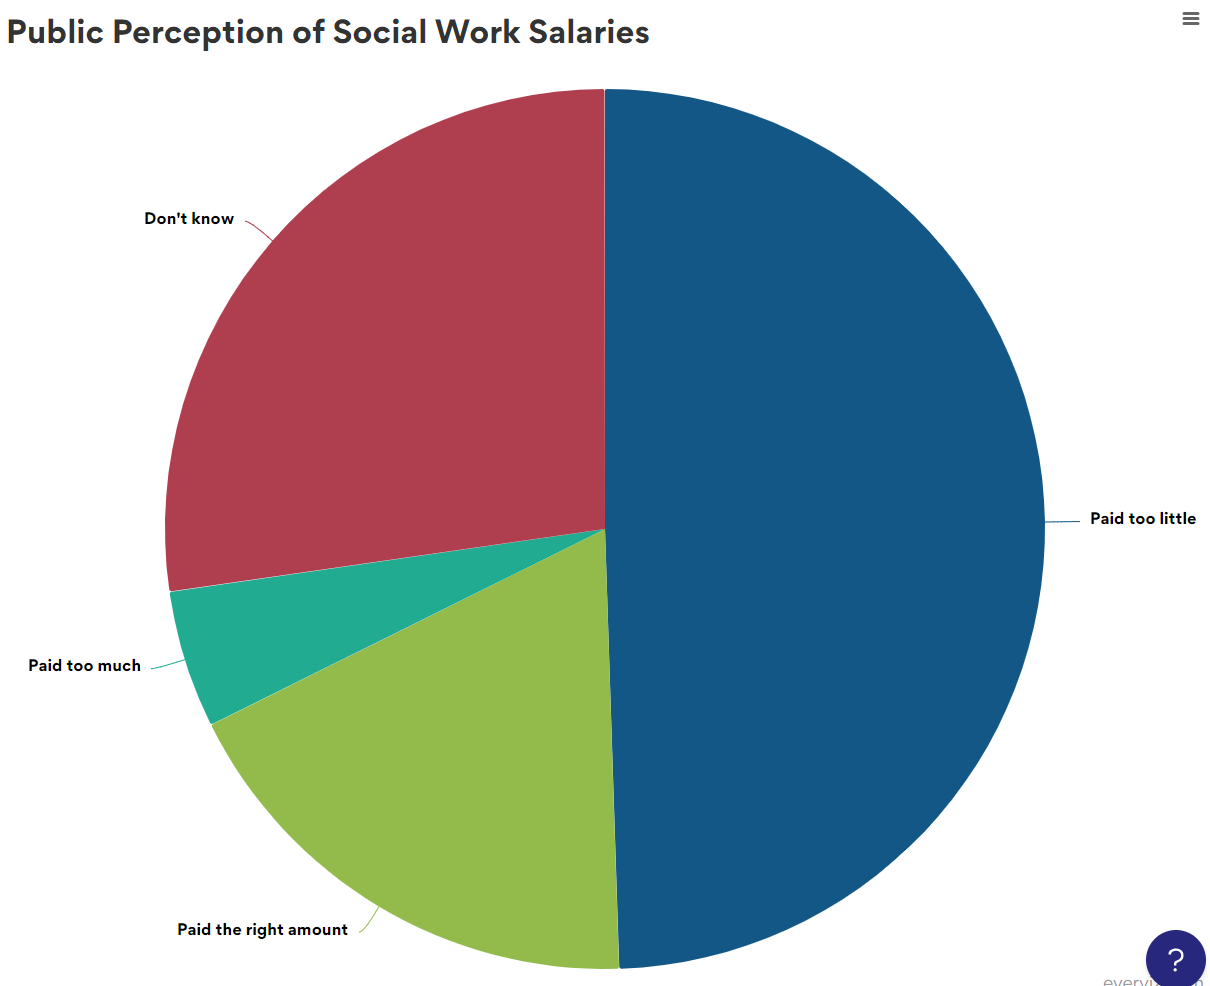 Public Perception of Social Work Salaries - Pie chart